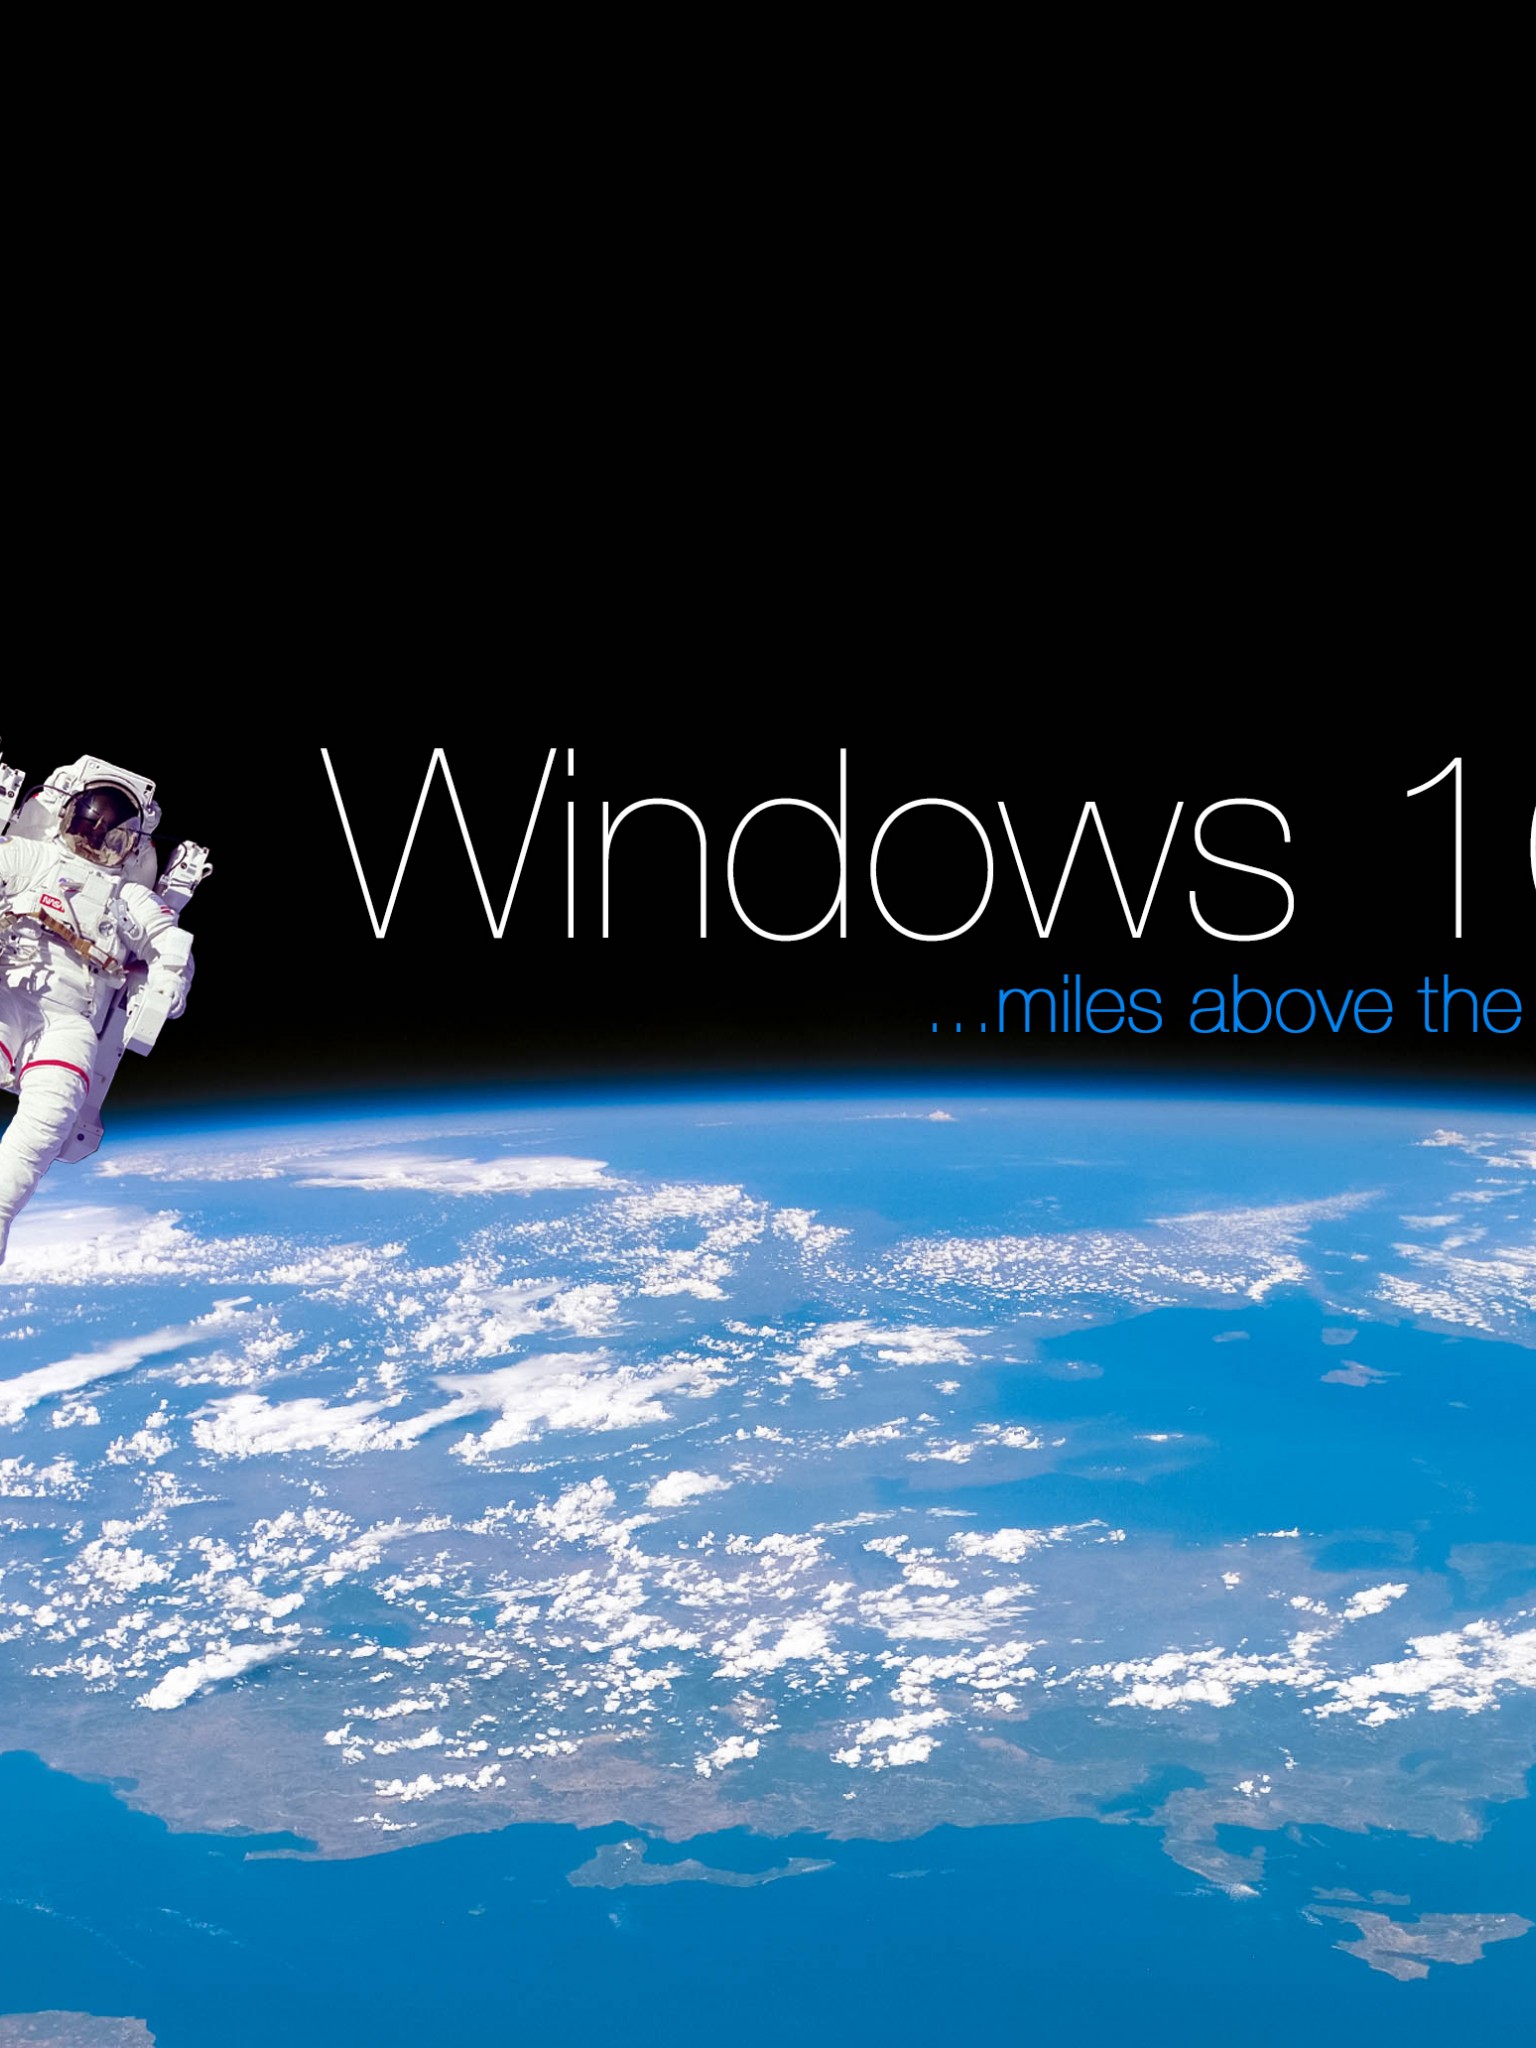 Windows Space 4k Wallpaper Style